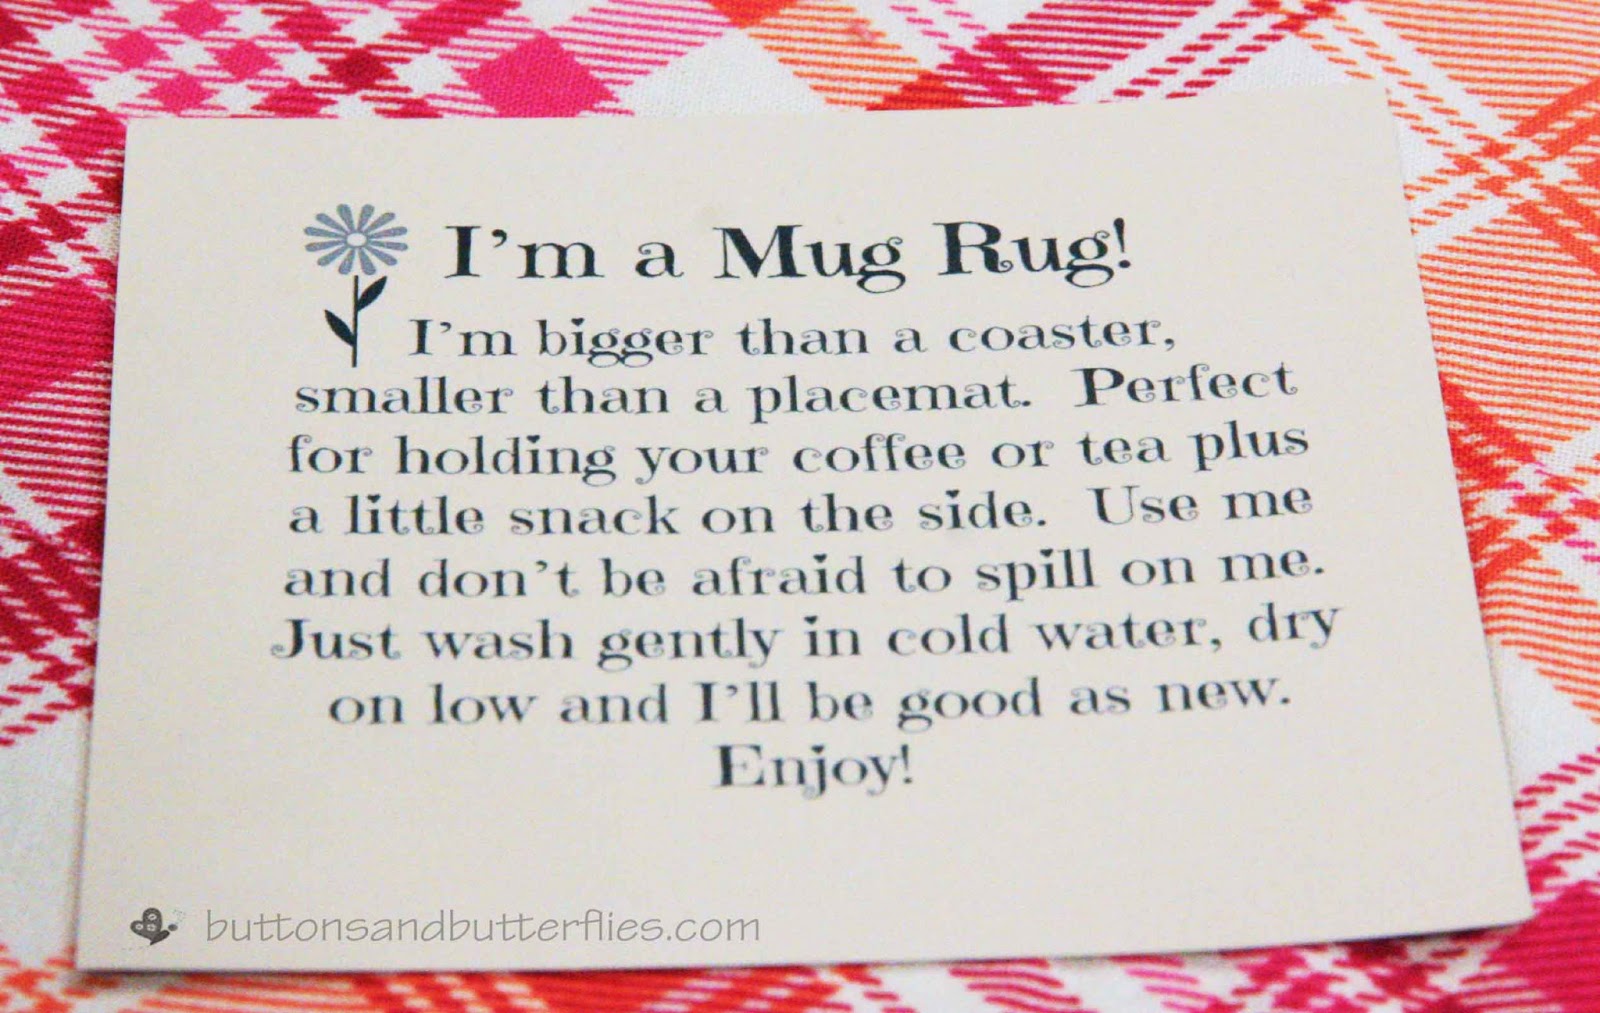 buttons-and-butterflies-mug-rug-tag